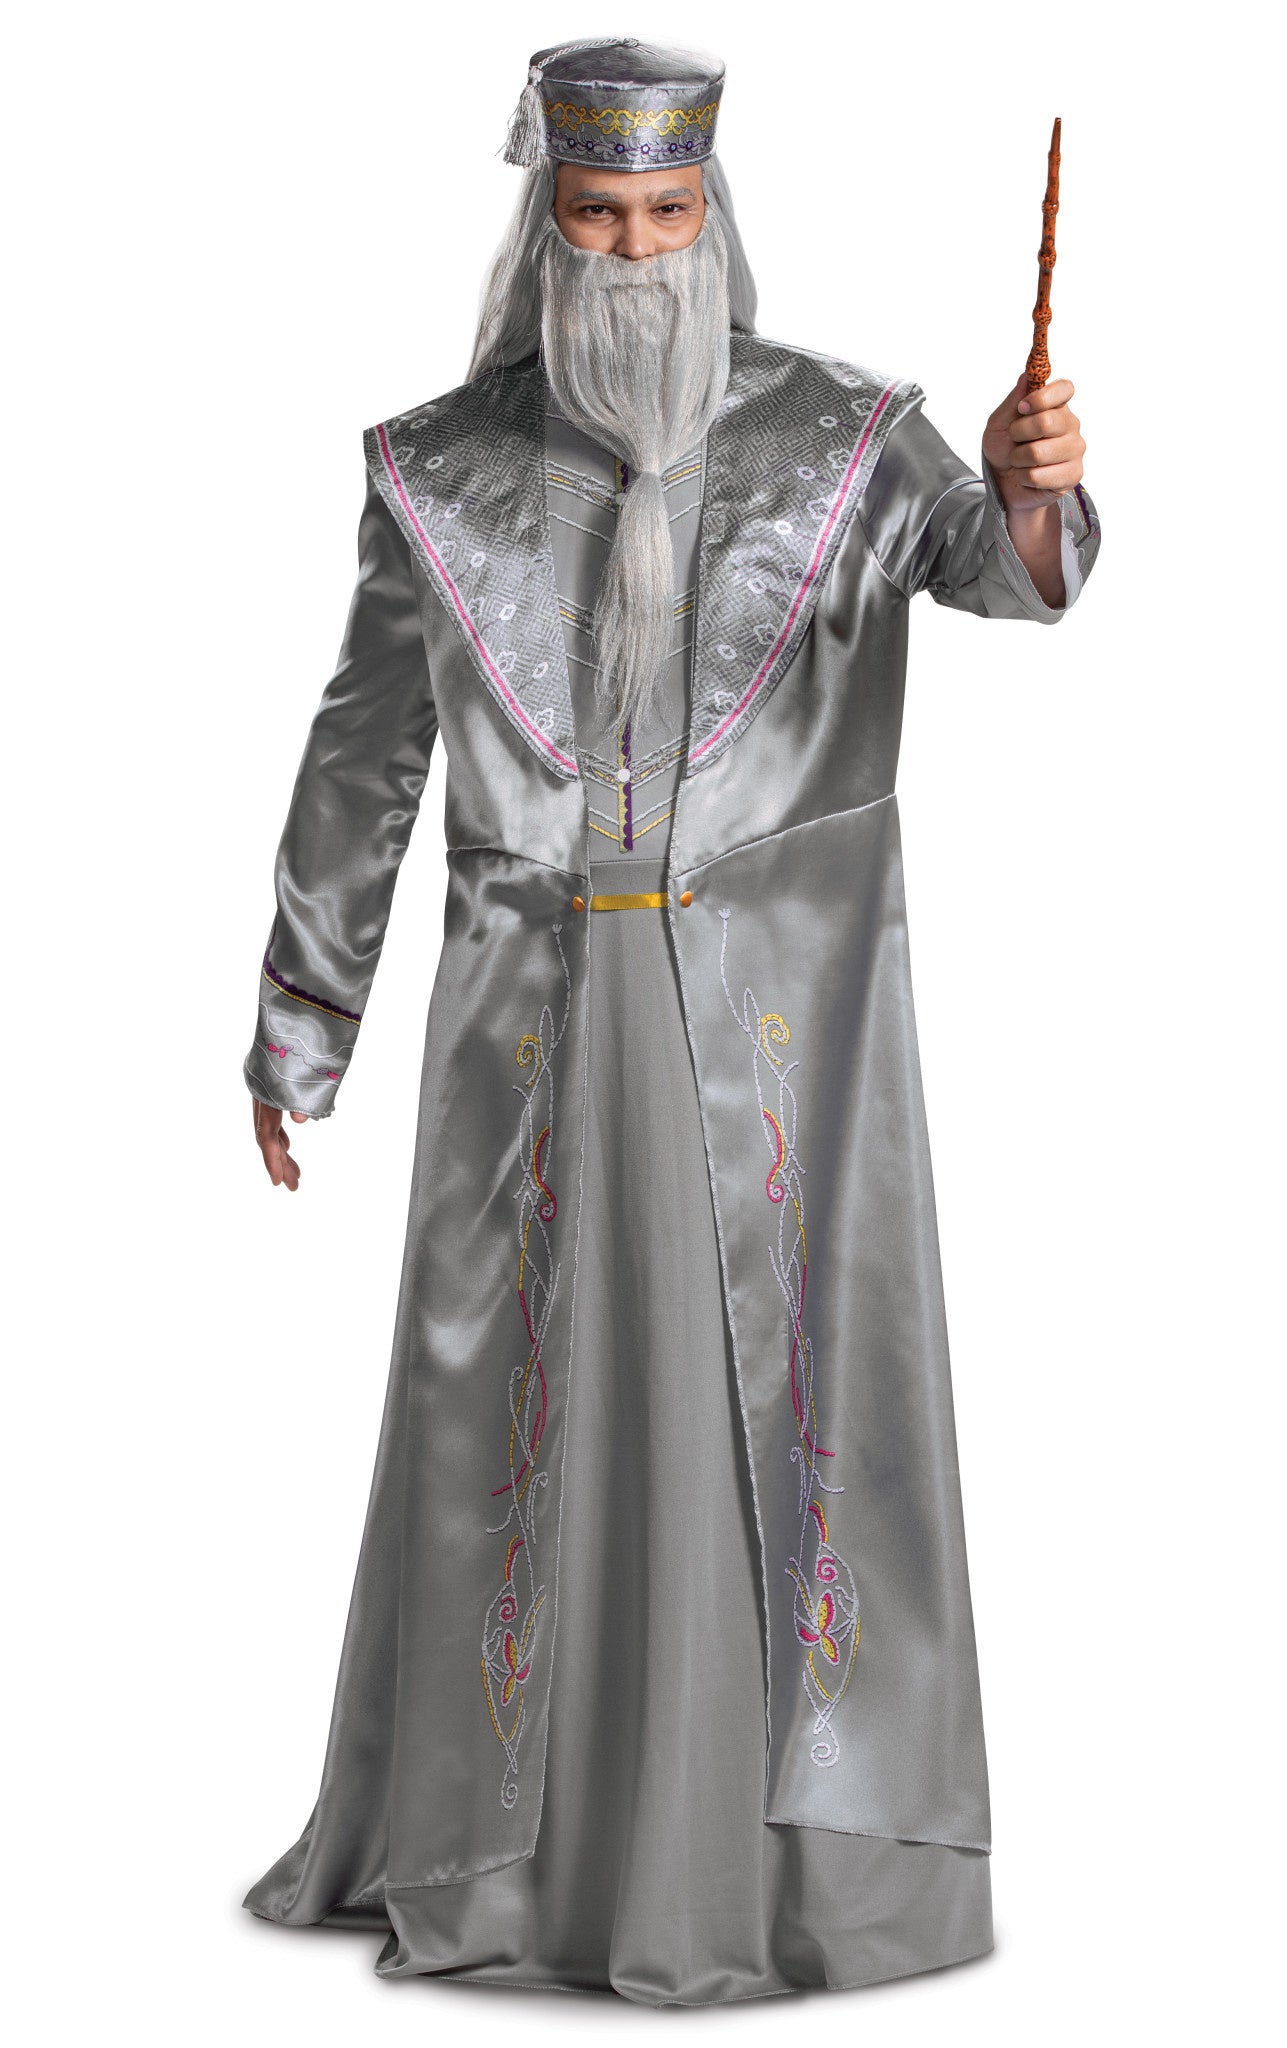 A man wearing an adult Dumbledore costume.